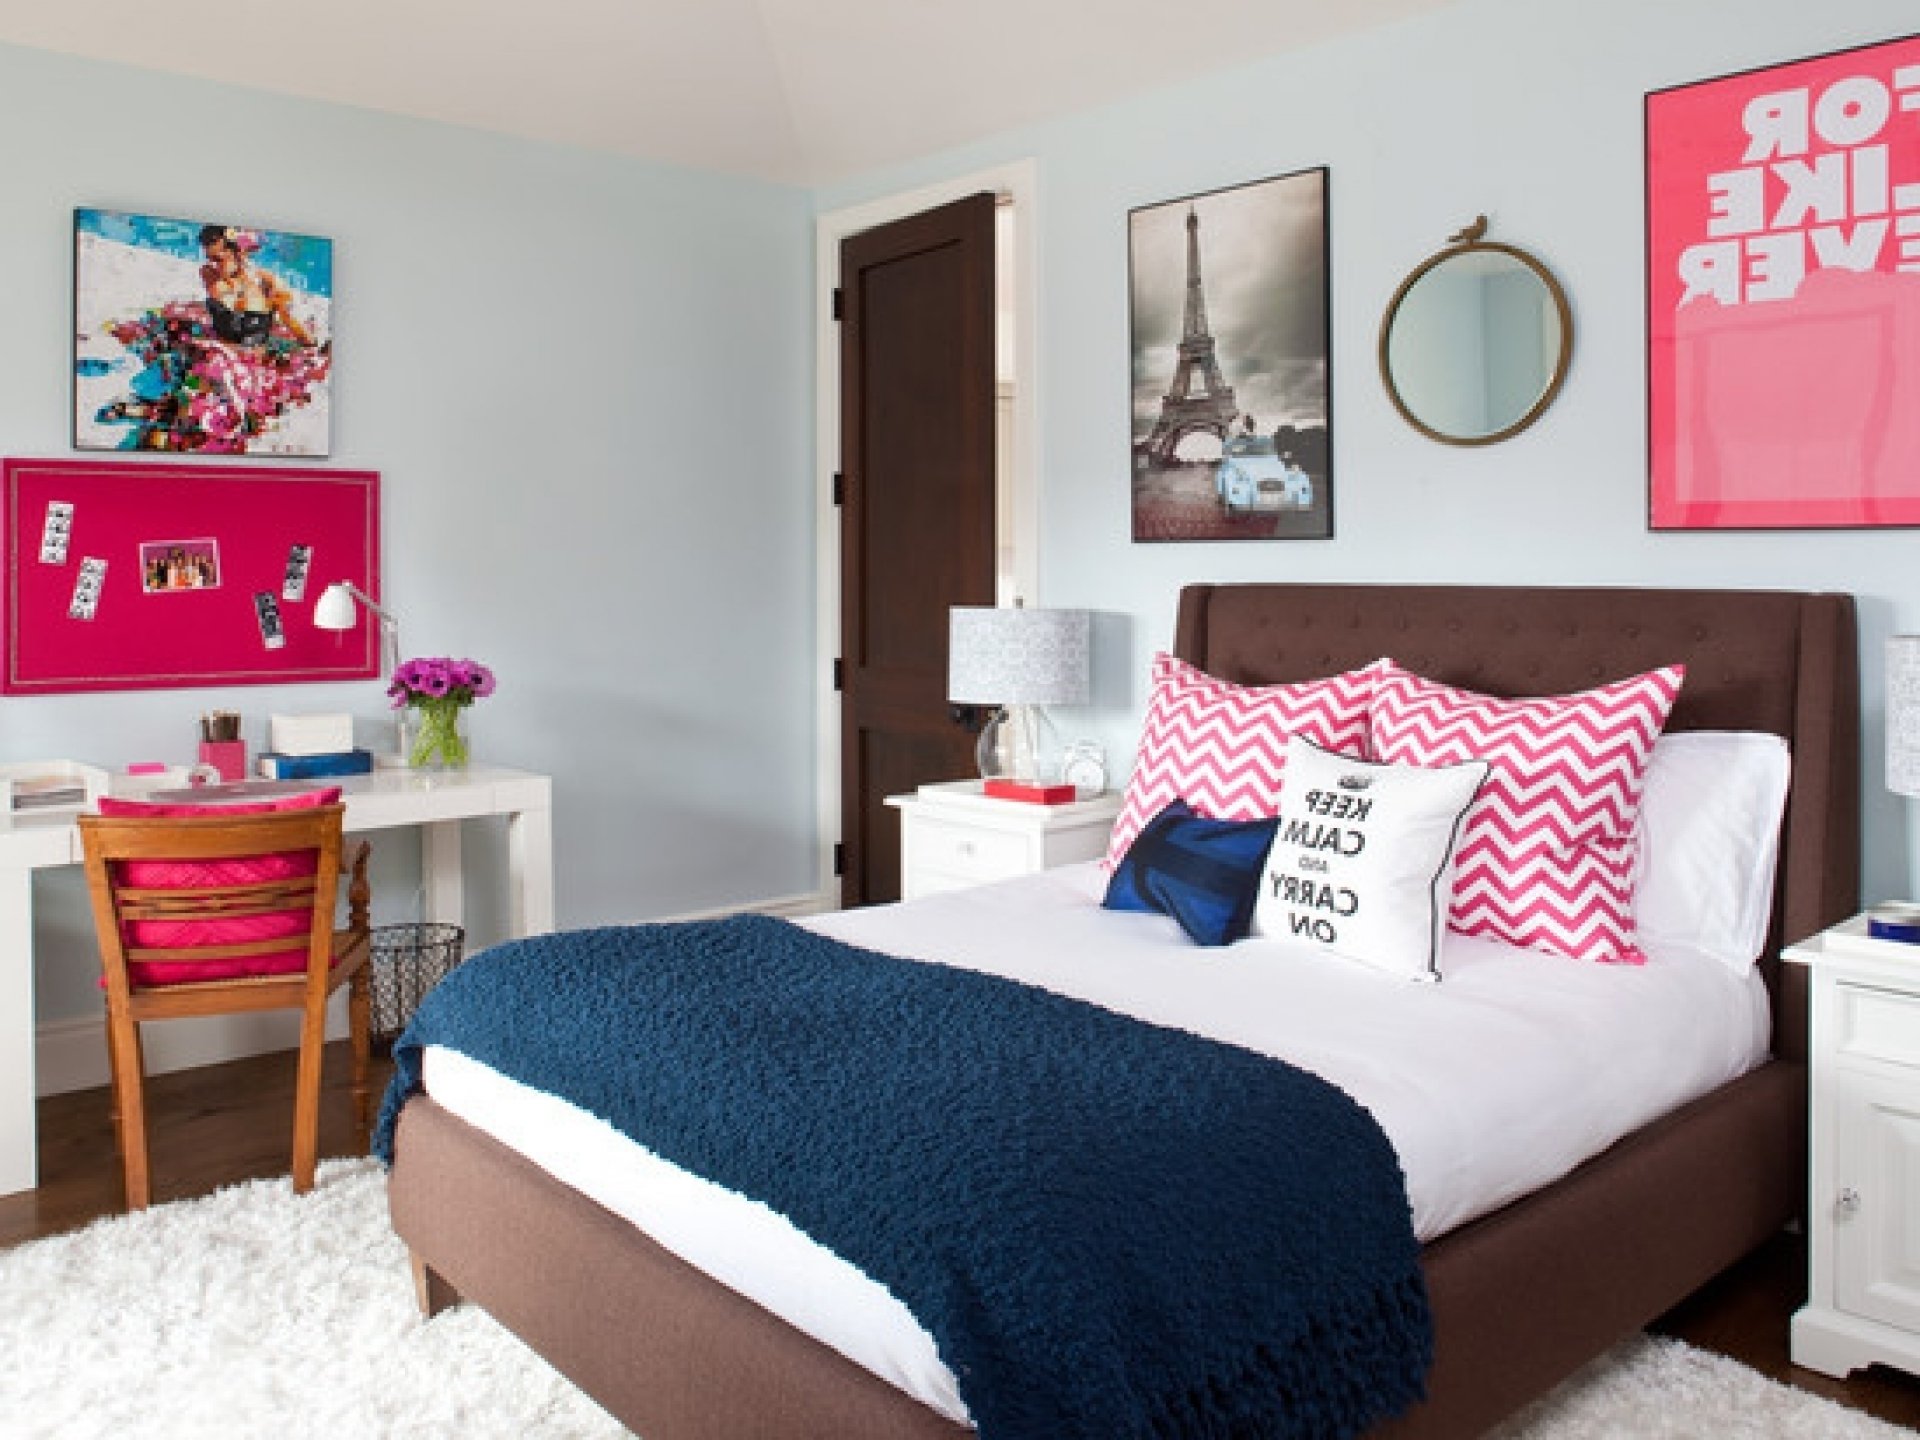 10 Fantastic Room Ideas For Teenage Girls bedroom ideas teens vuelosfera 2022